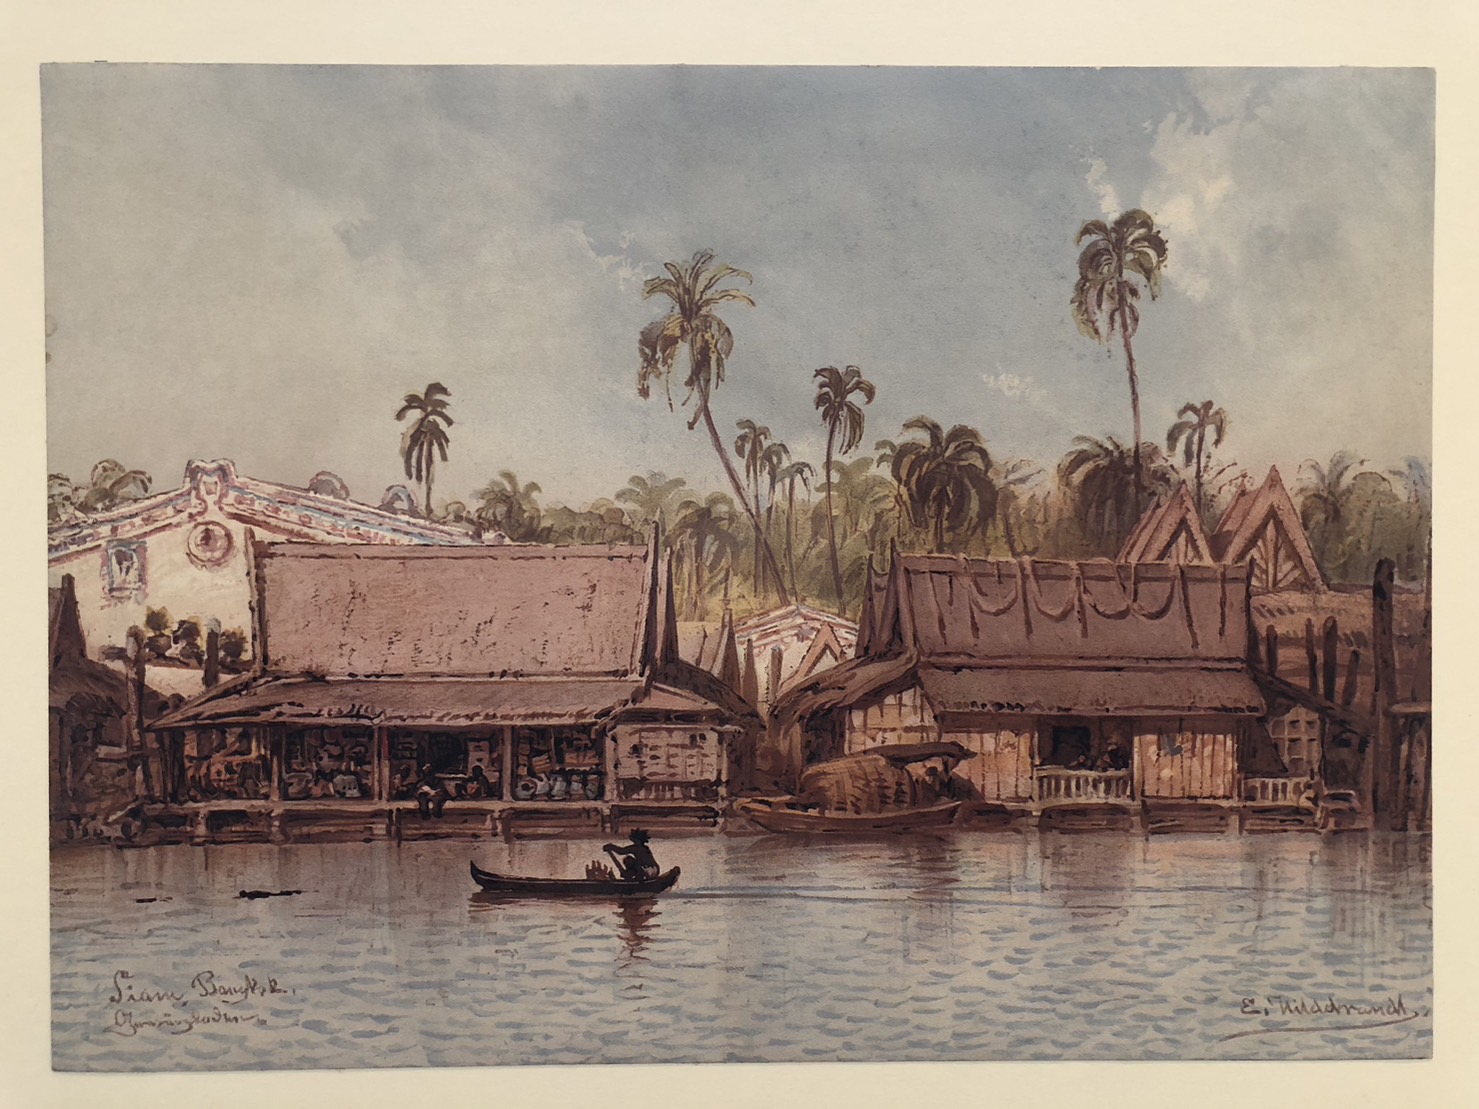 Indiae Orientalis - Old Maps and Prints, Bangkok, Thailand